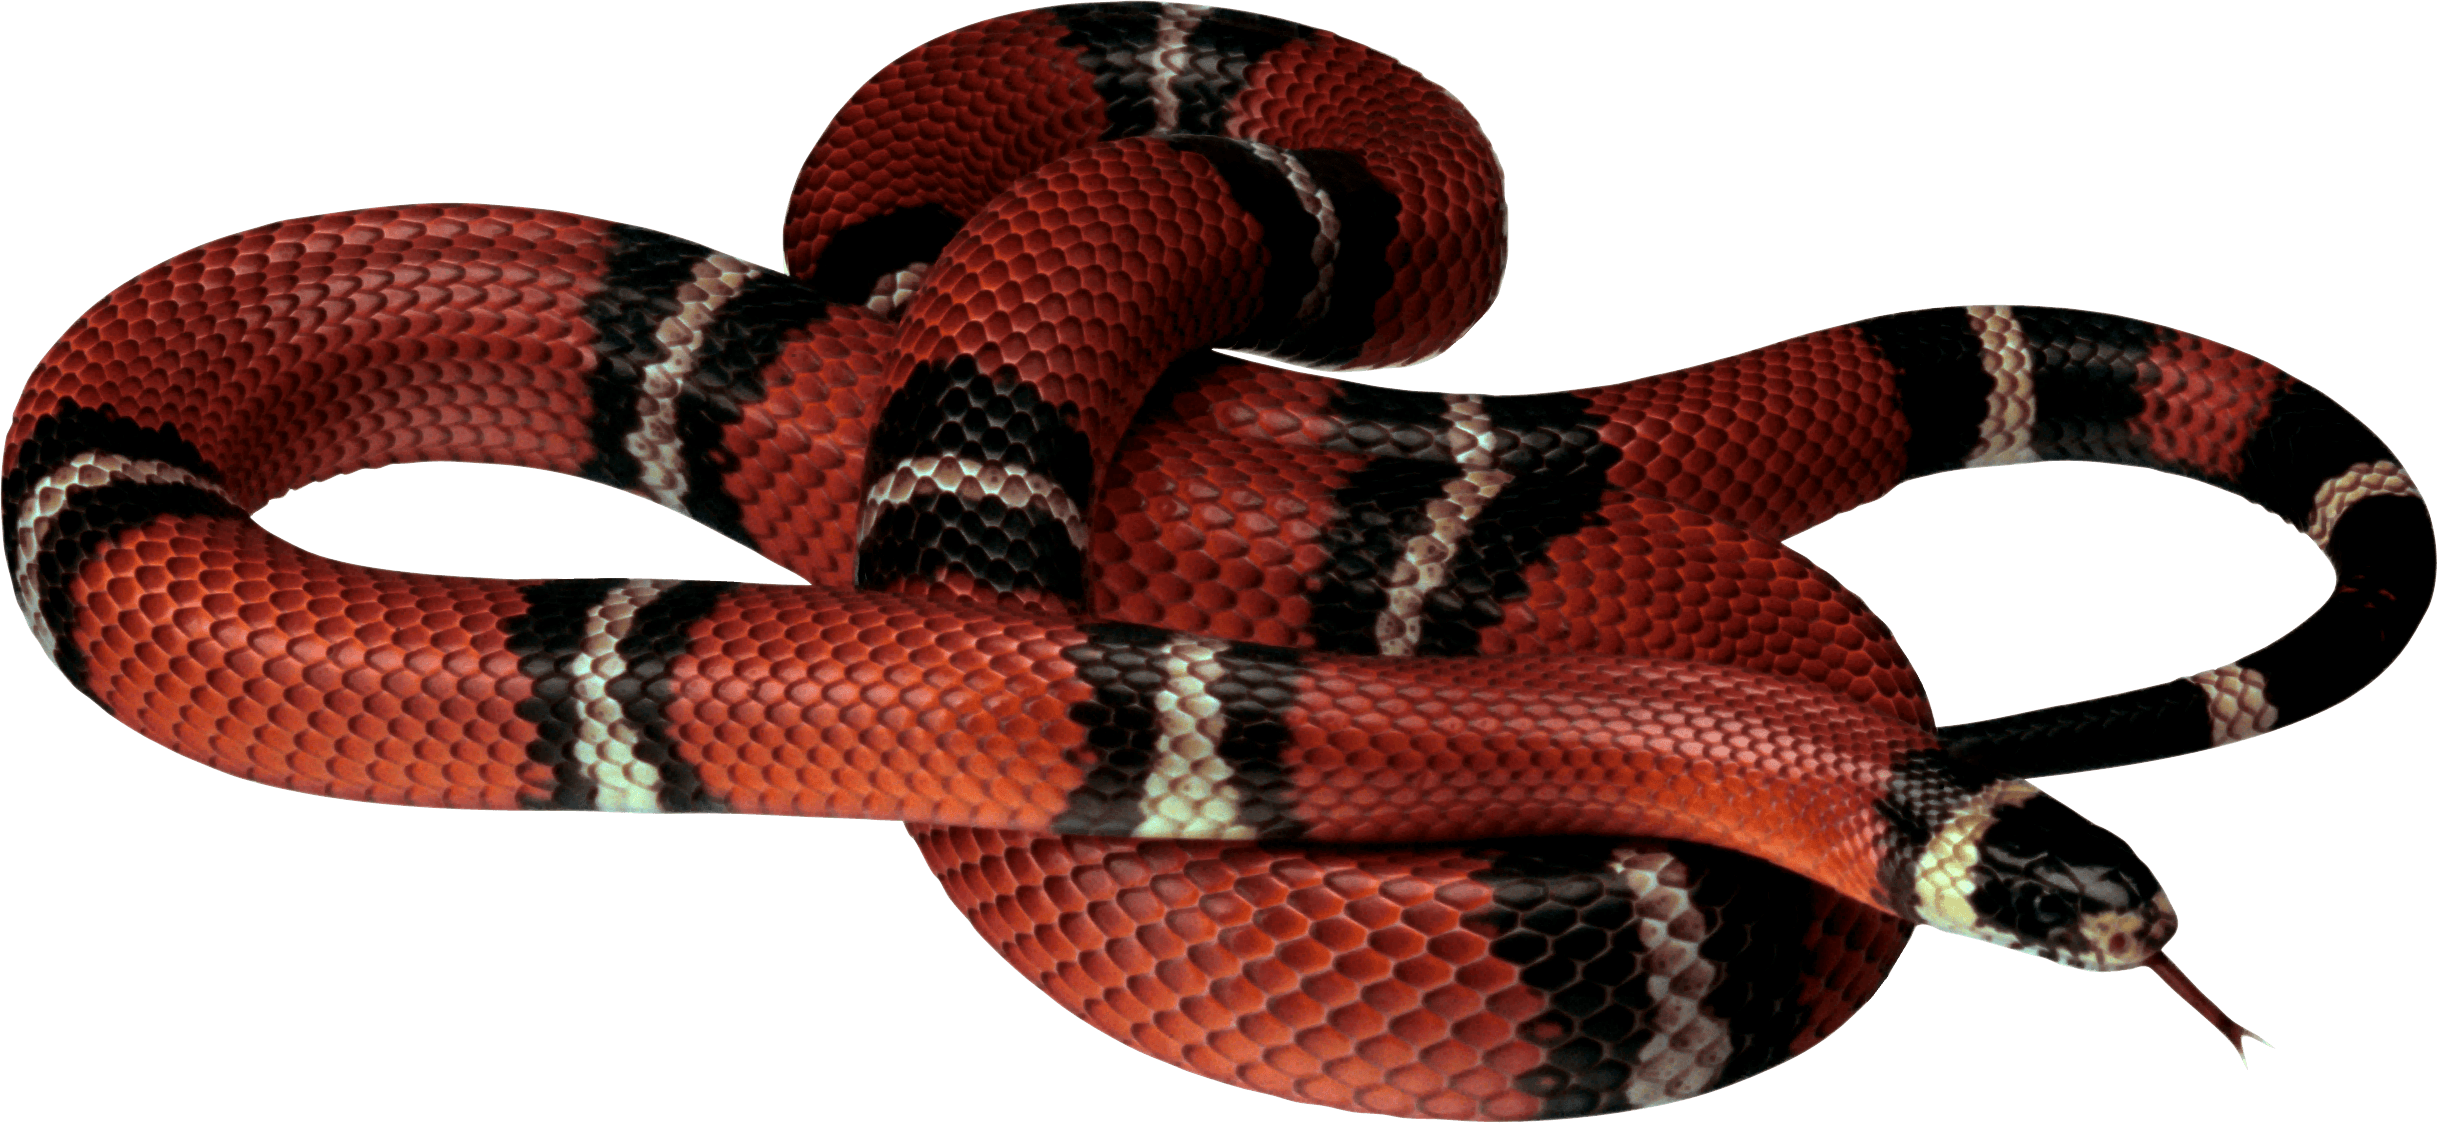 Snake Wallpaper Wallpaper, free download Wallpaper picture snakes